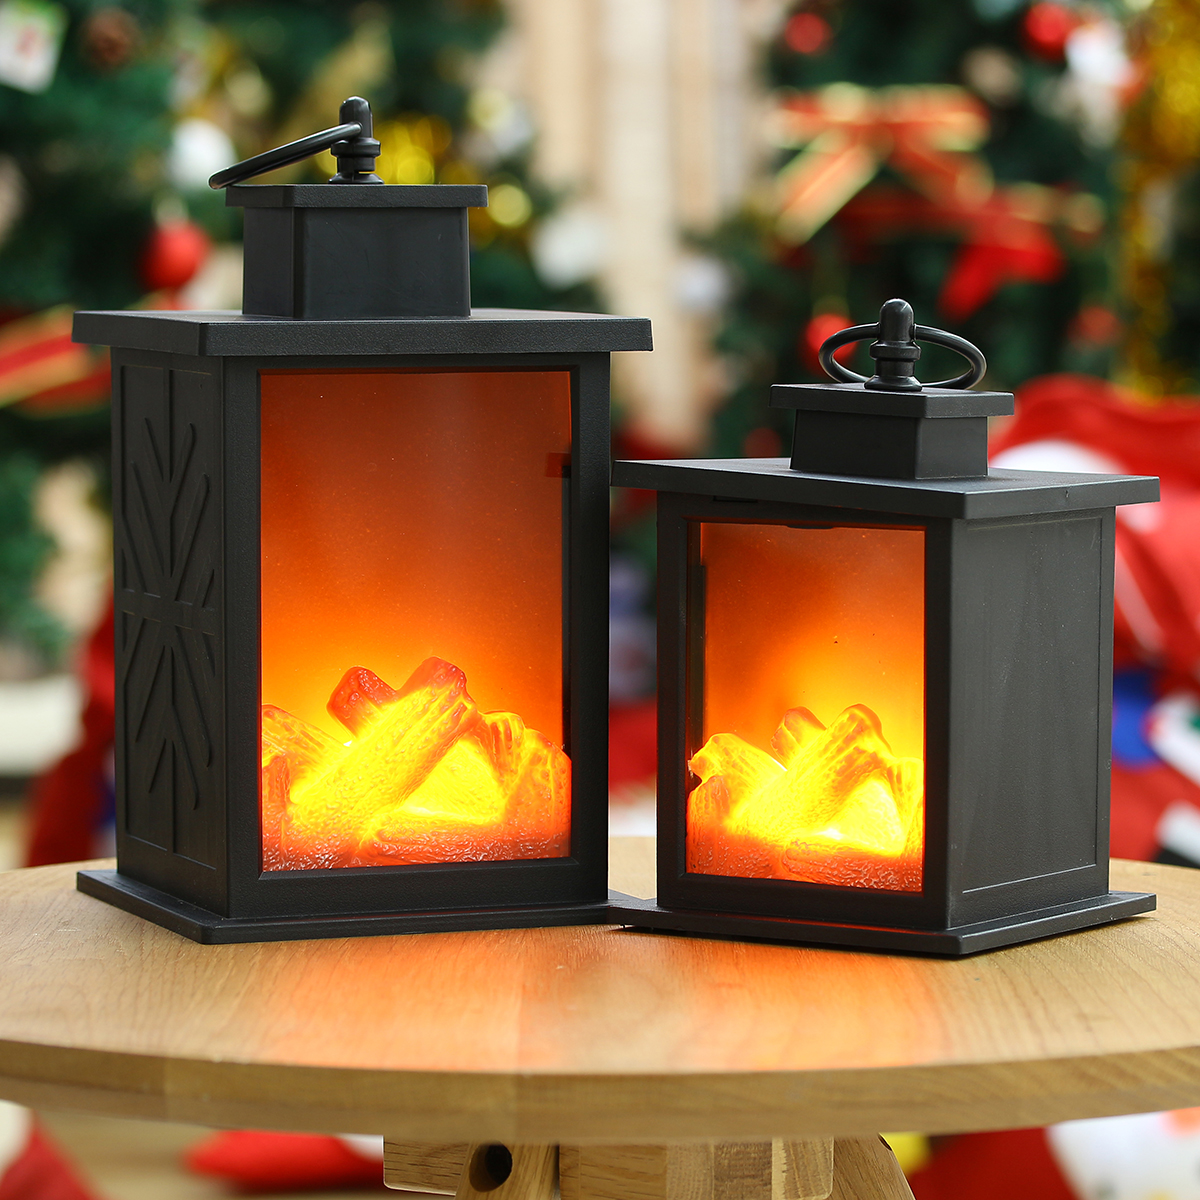 LED-Fireplace-Lantern-Flameless-Light-Fire-Effect-Vintage-Battery-Power-Lamp-HOT-1697164-2